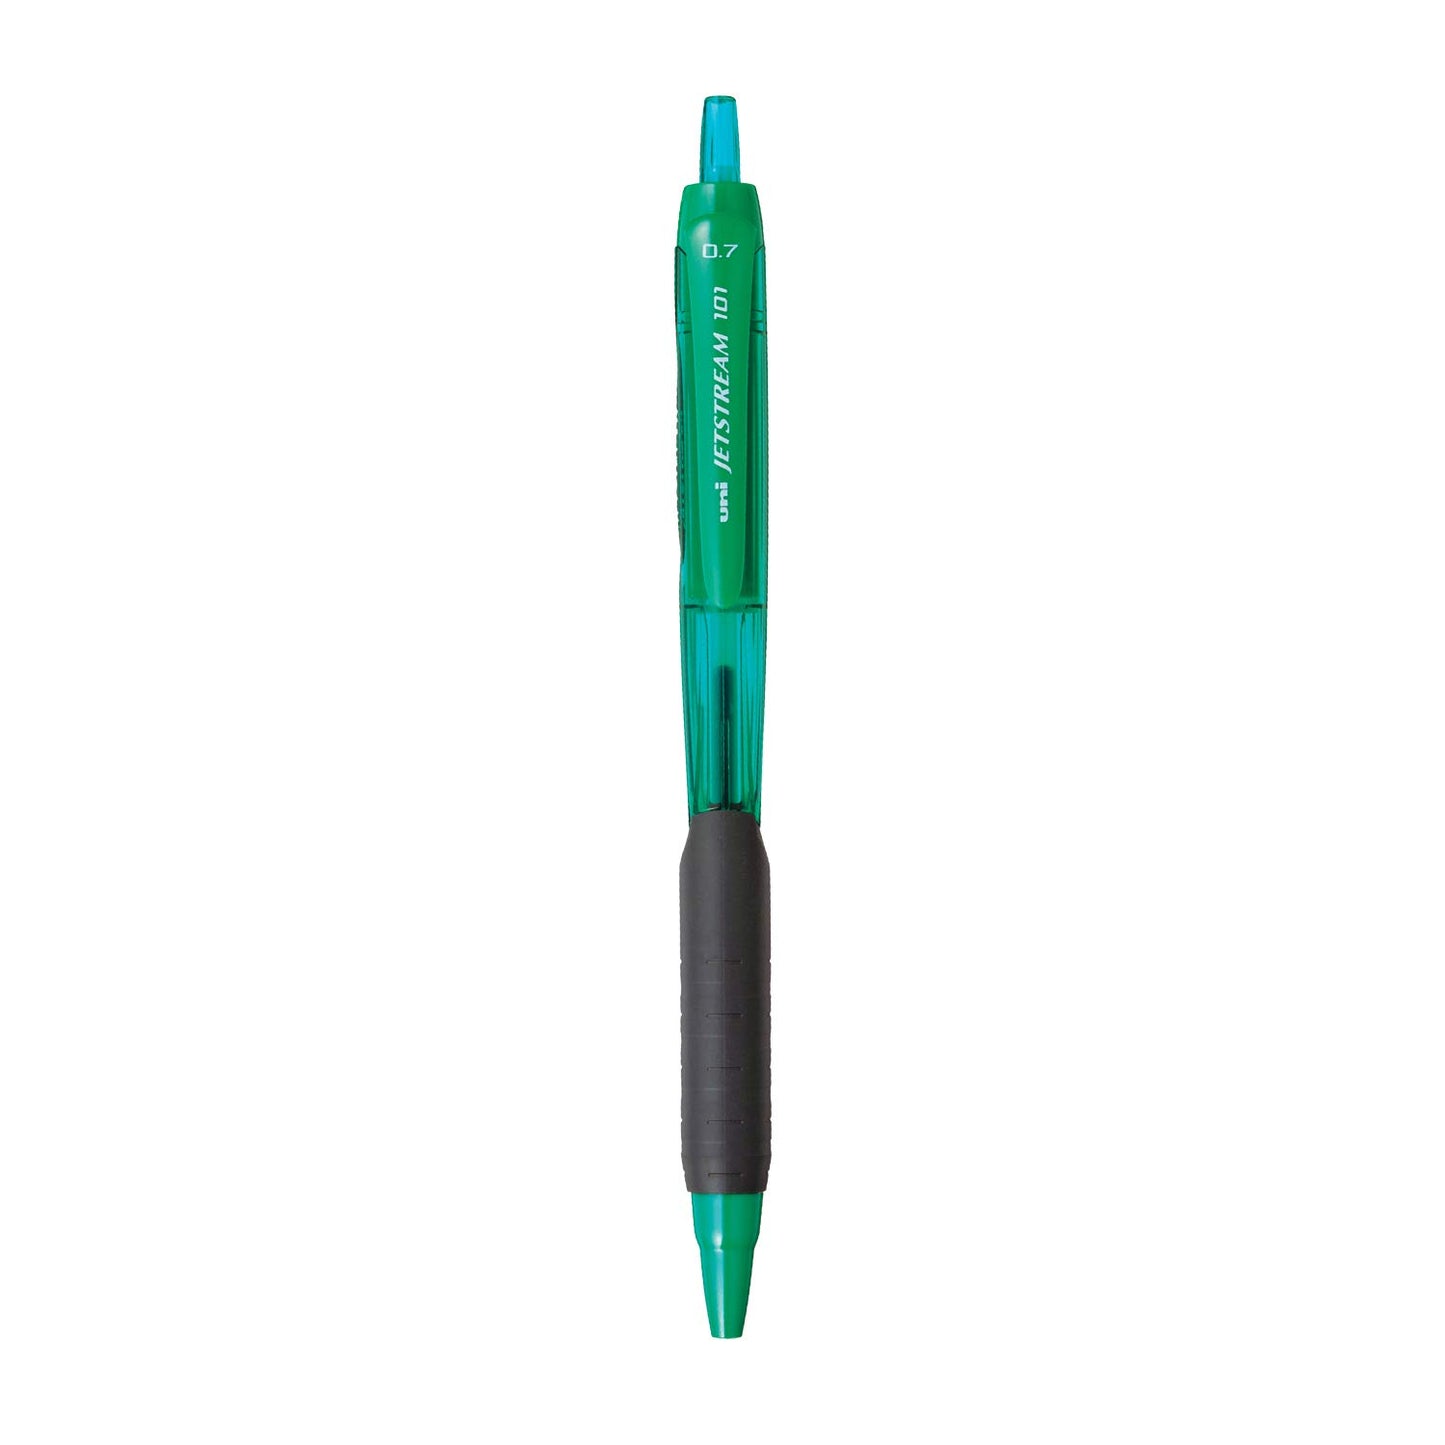 Roller Ball Pens, Black, 0.7mm Fine Nib - Pack of 40 –